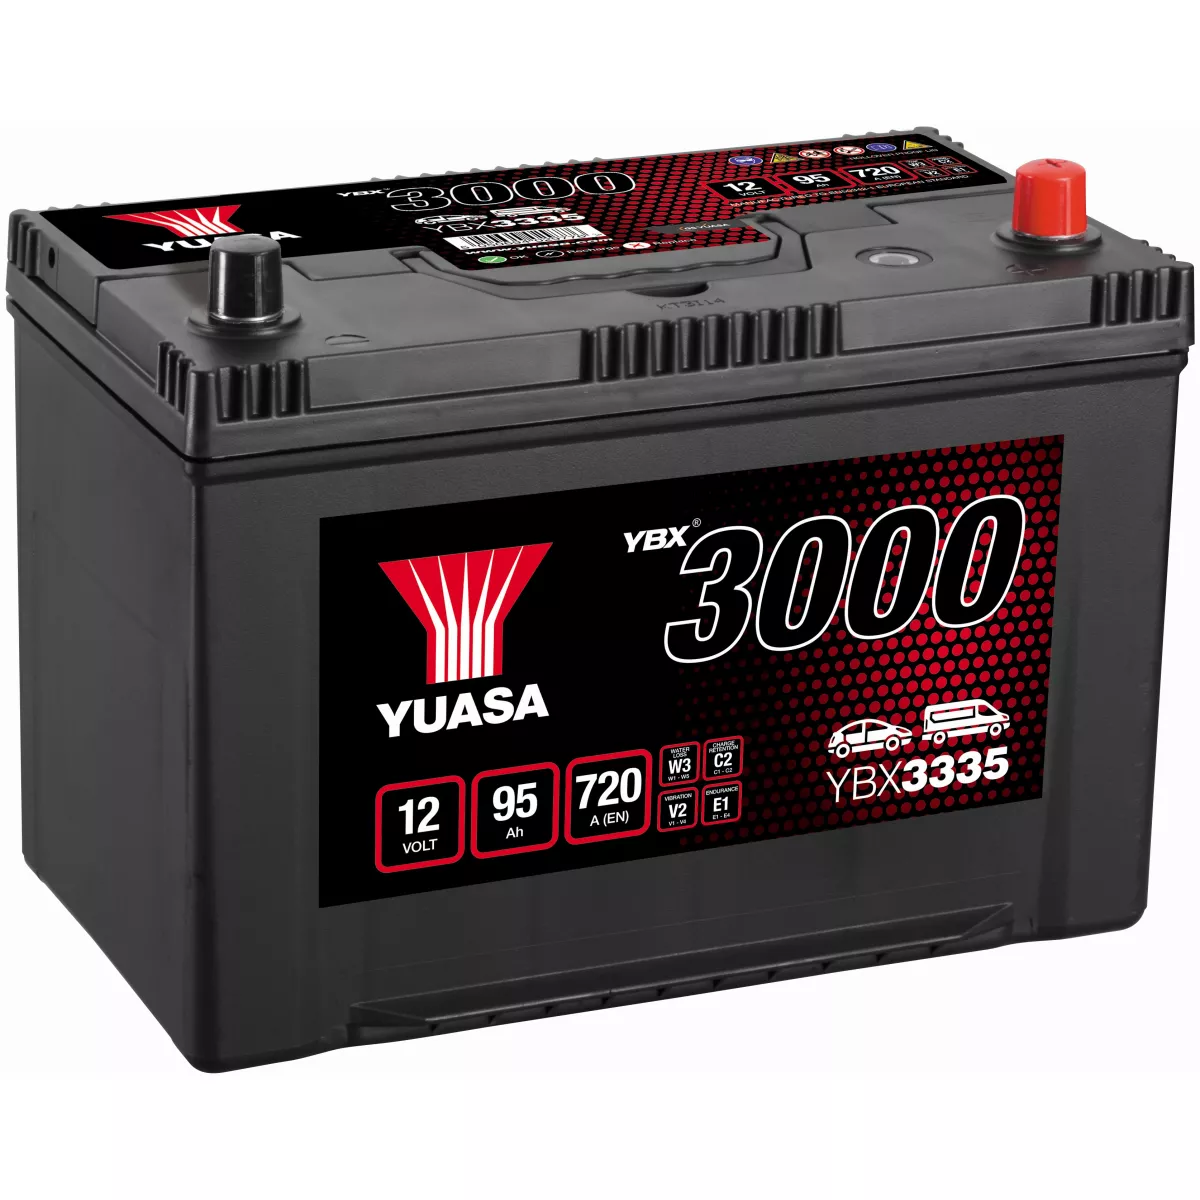 BATTERIE YUASA YBX3335 12V 95Ah 720A - Batteries Auto, Voitures